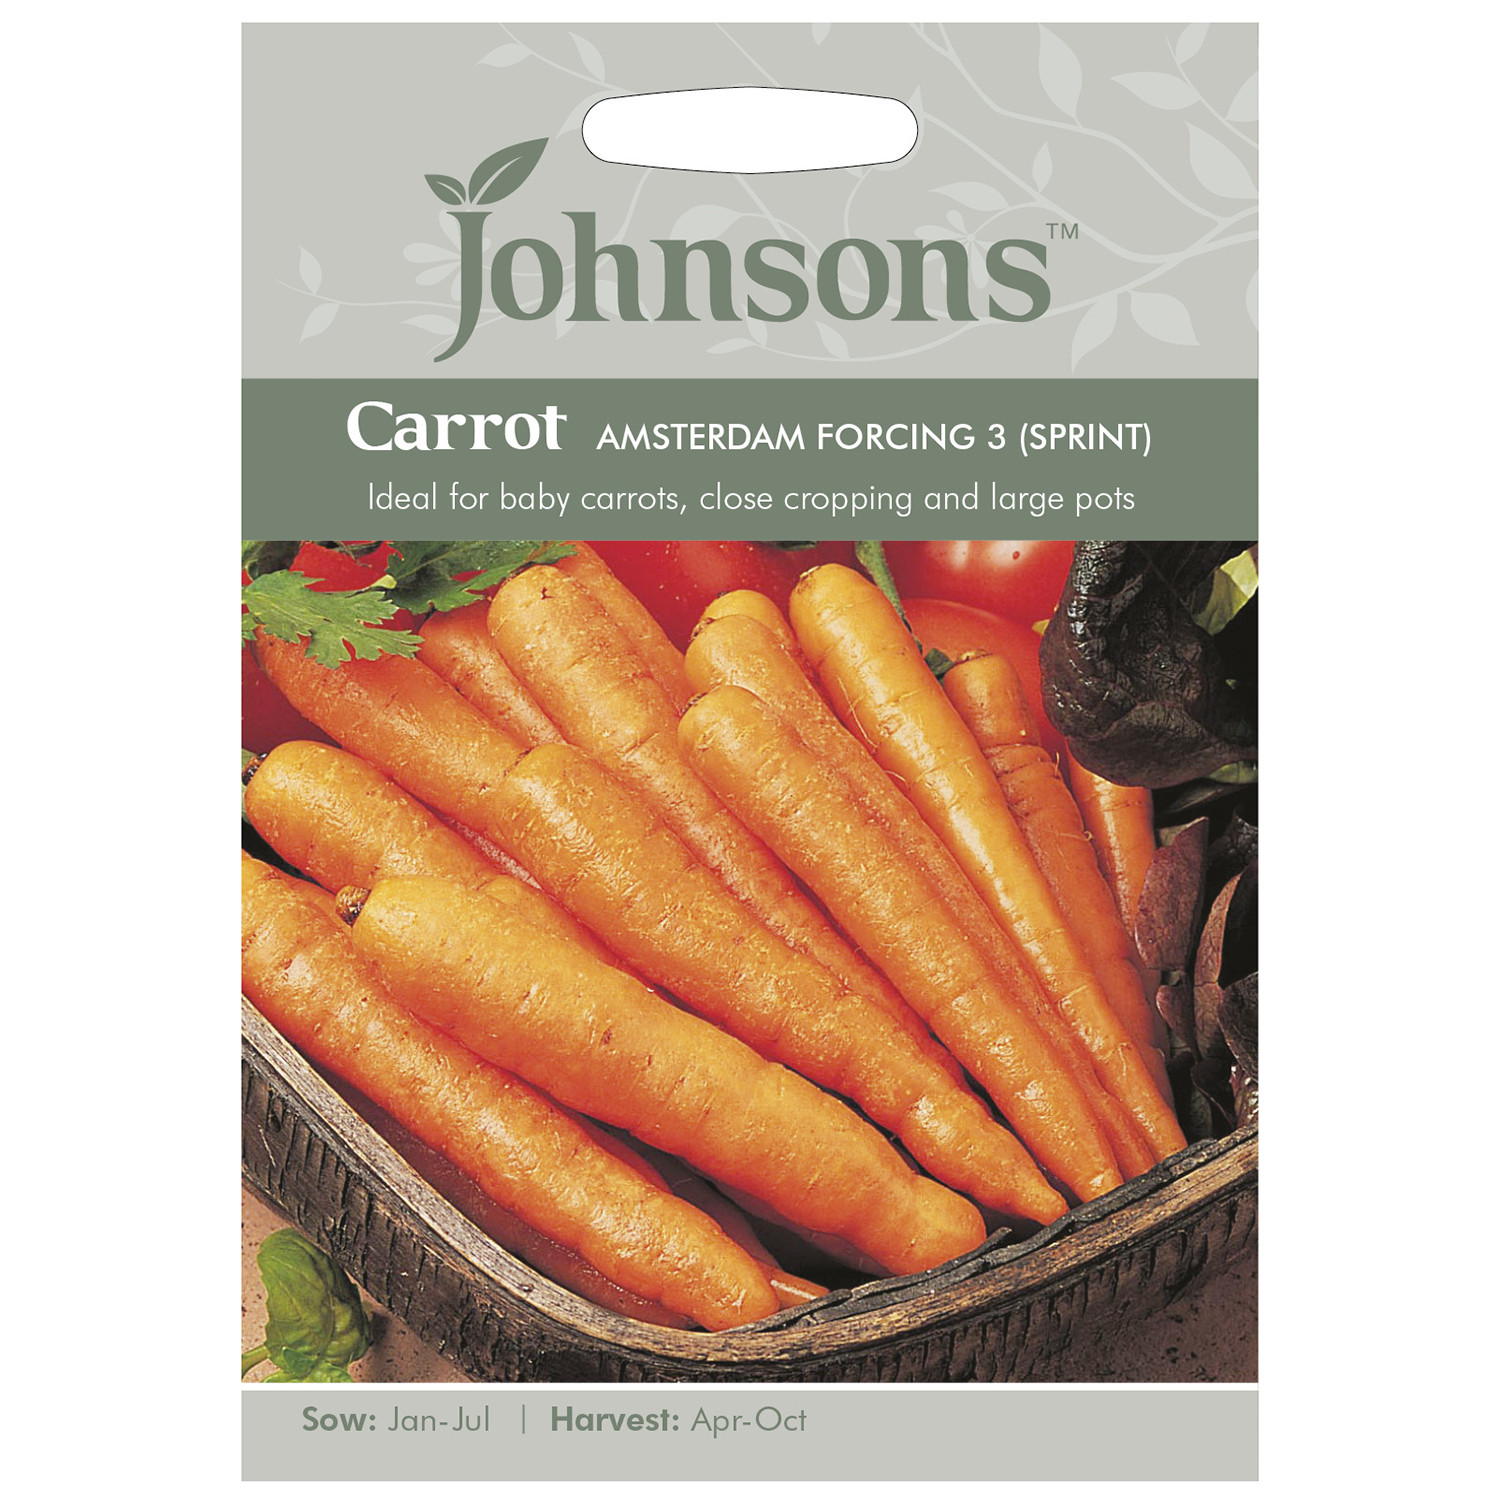 Jonhsons Amsterdam Forcing 3 Sprint Carrot Seeds Image 2